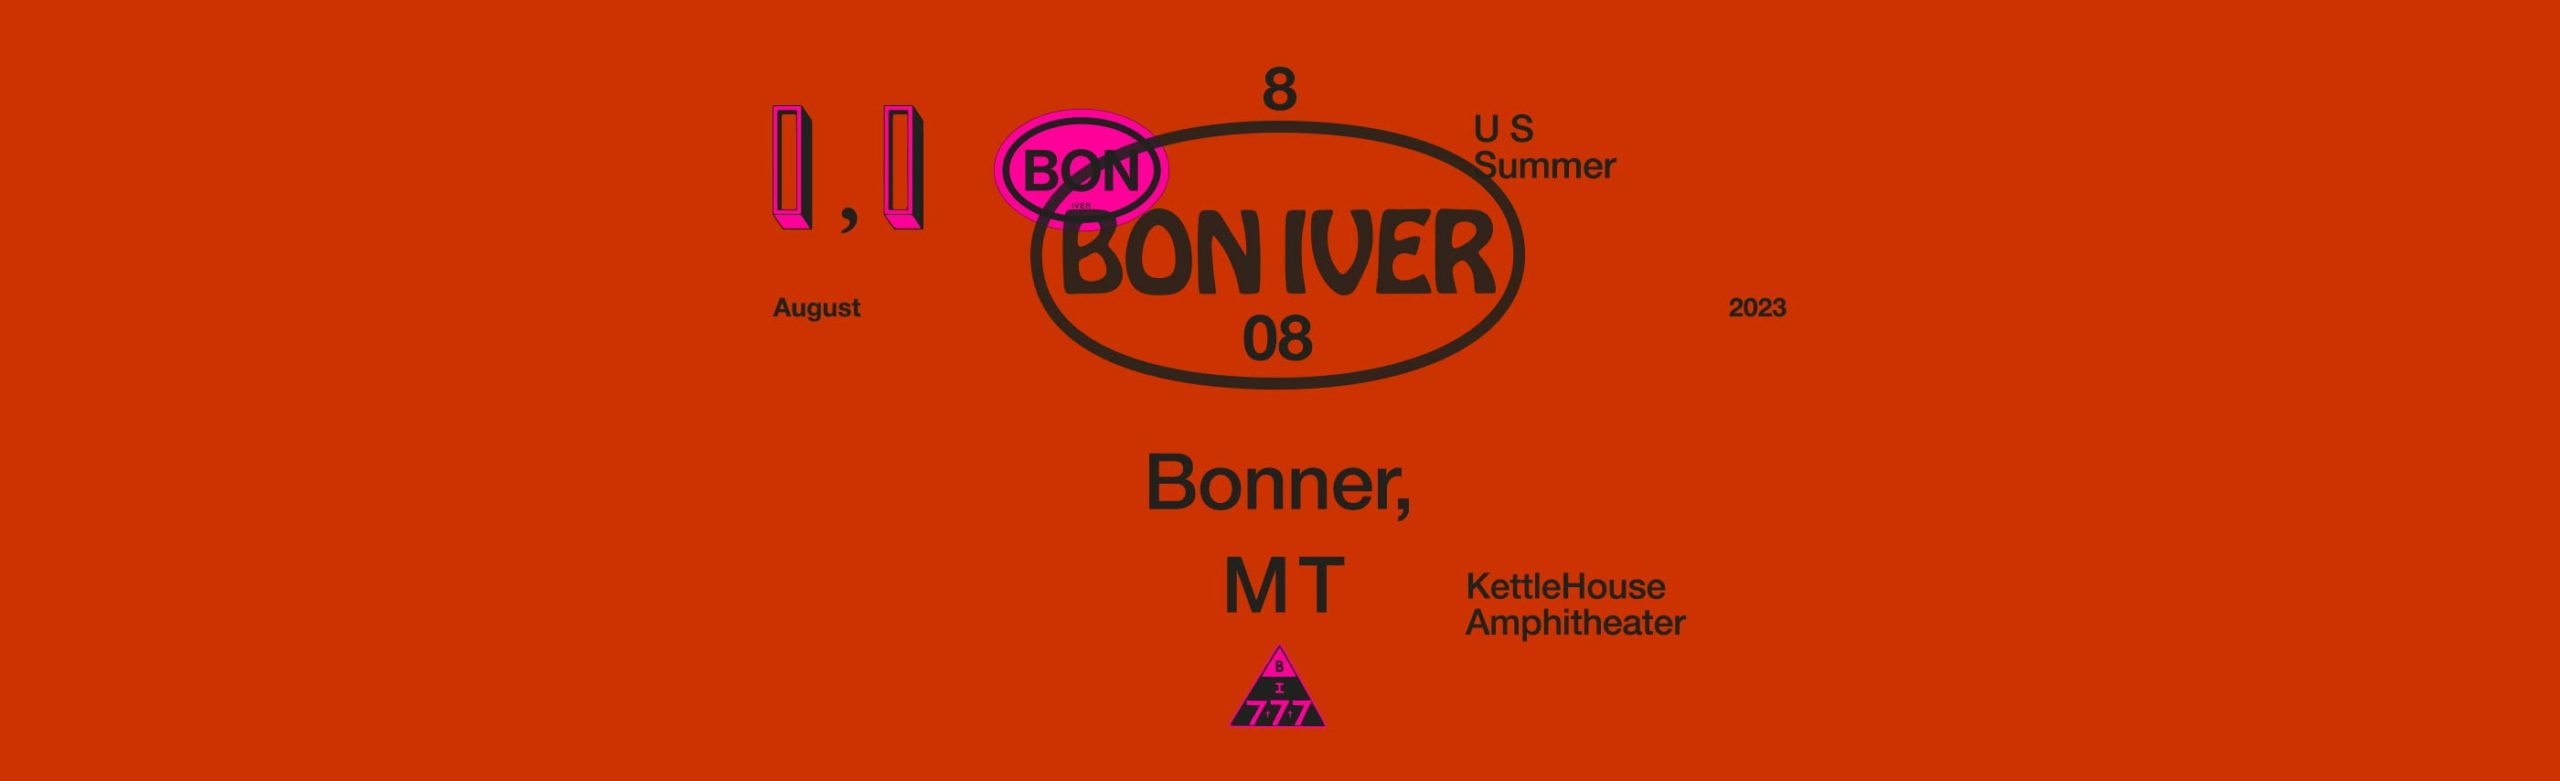 Bon Iver Confirms Summer 2023 Tour Stop at KettleHouse Amphitheater Image